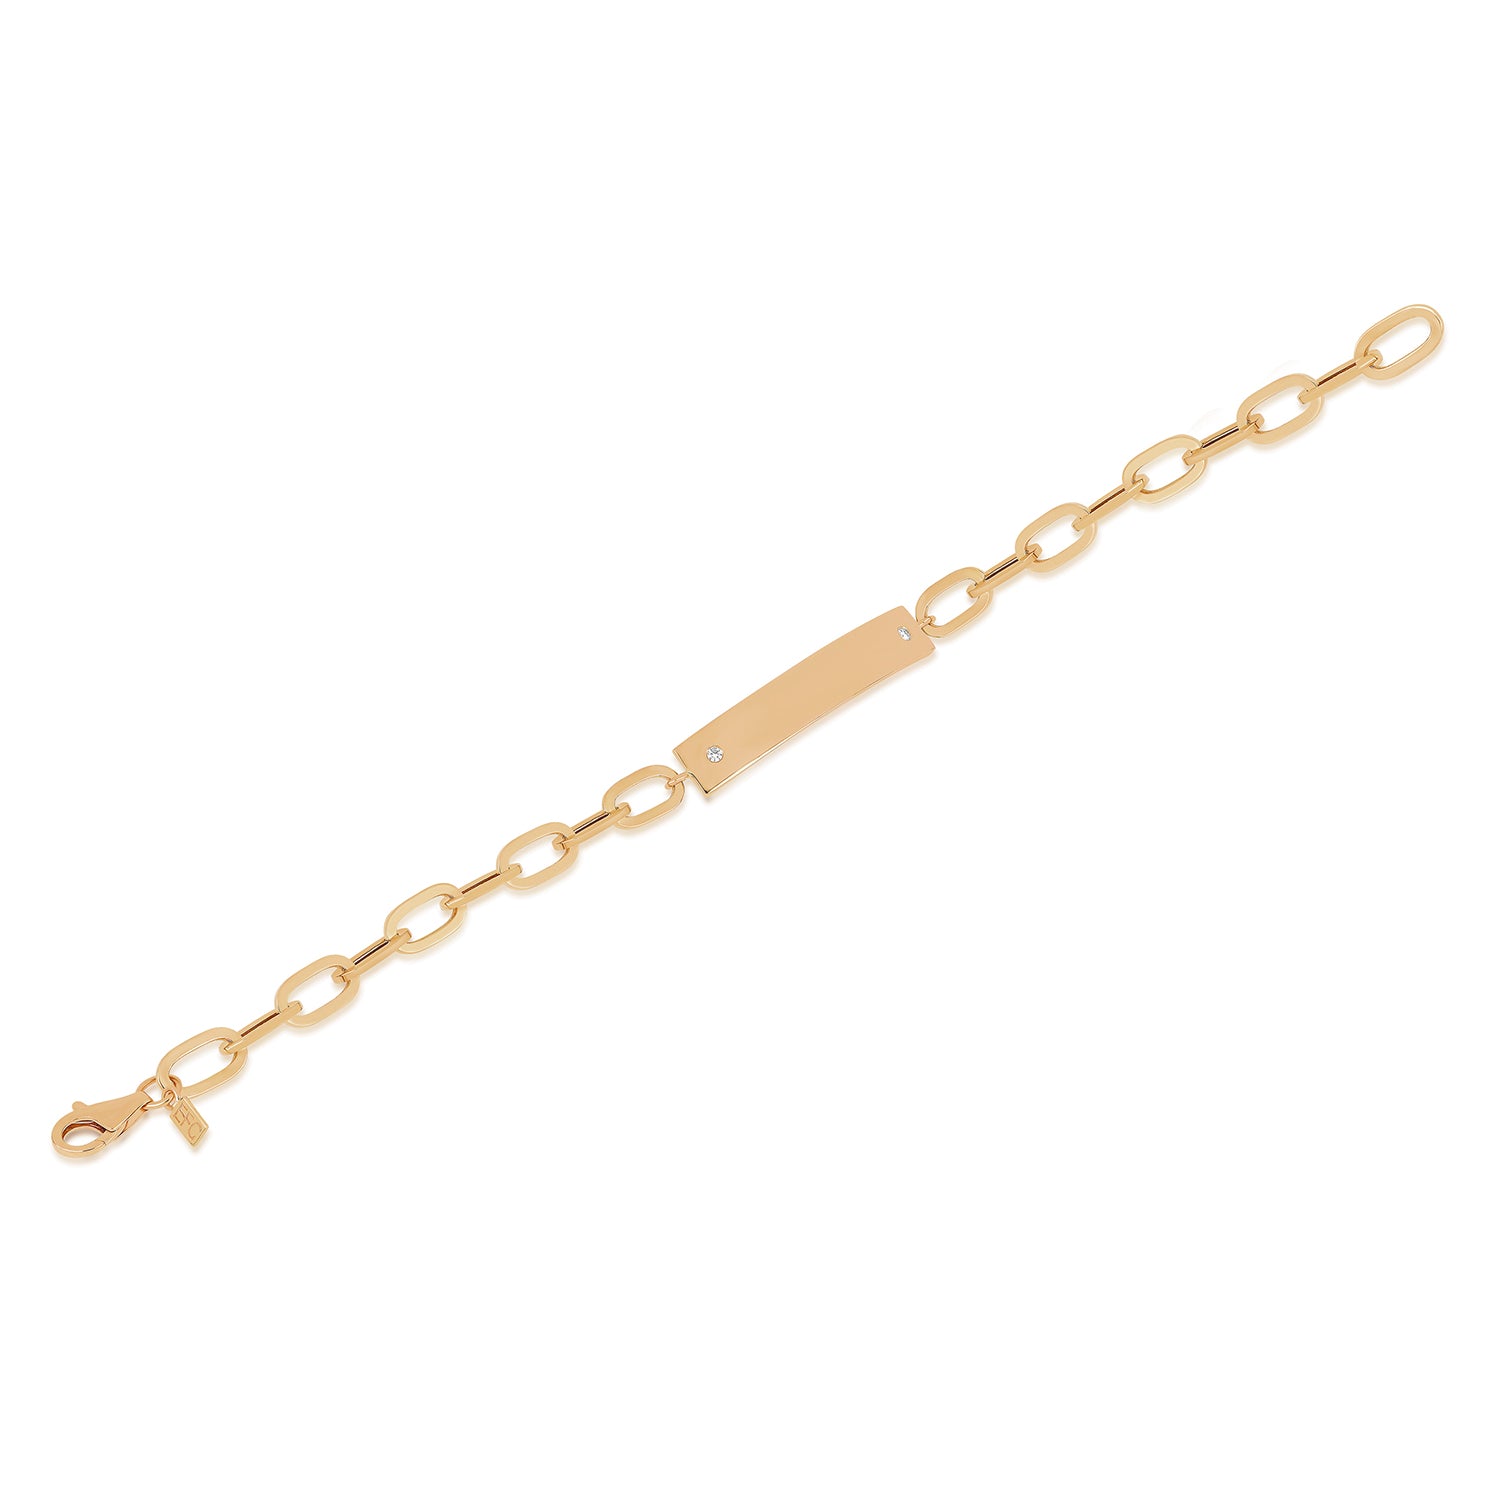 Nameplate Jumbo Link Bracelet in 14k rose gold